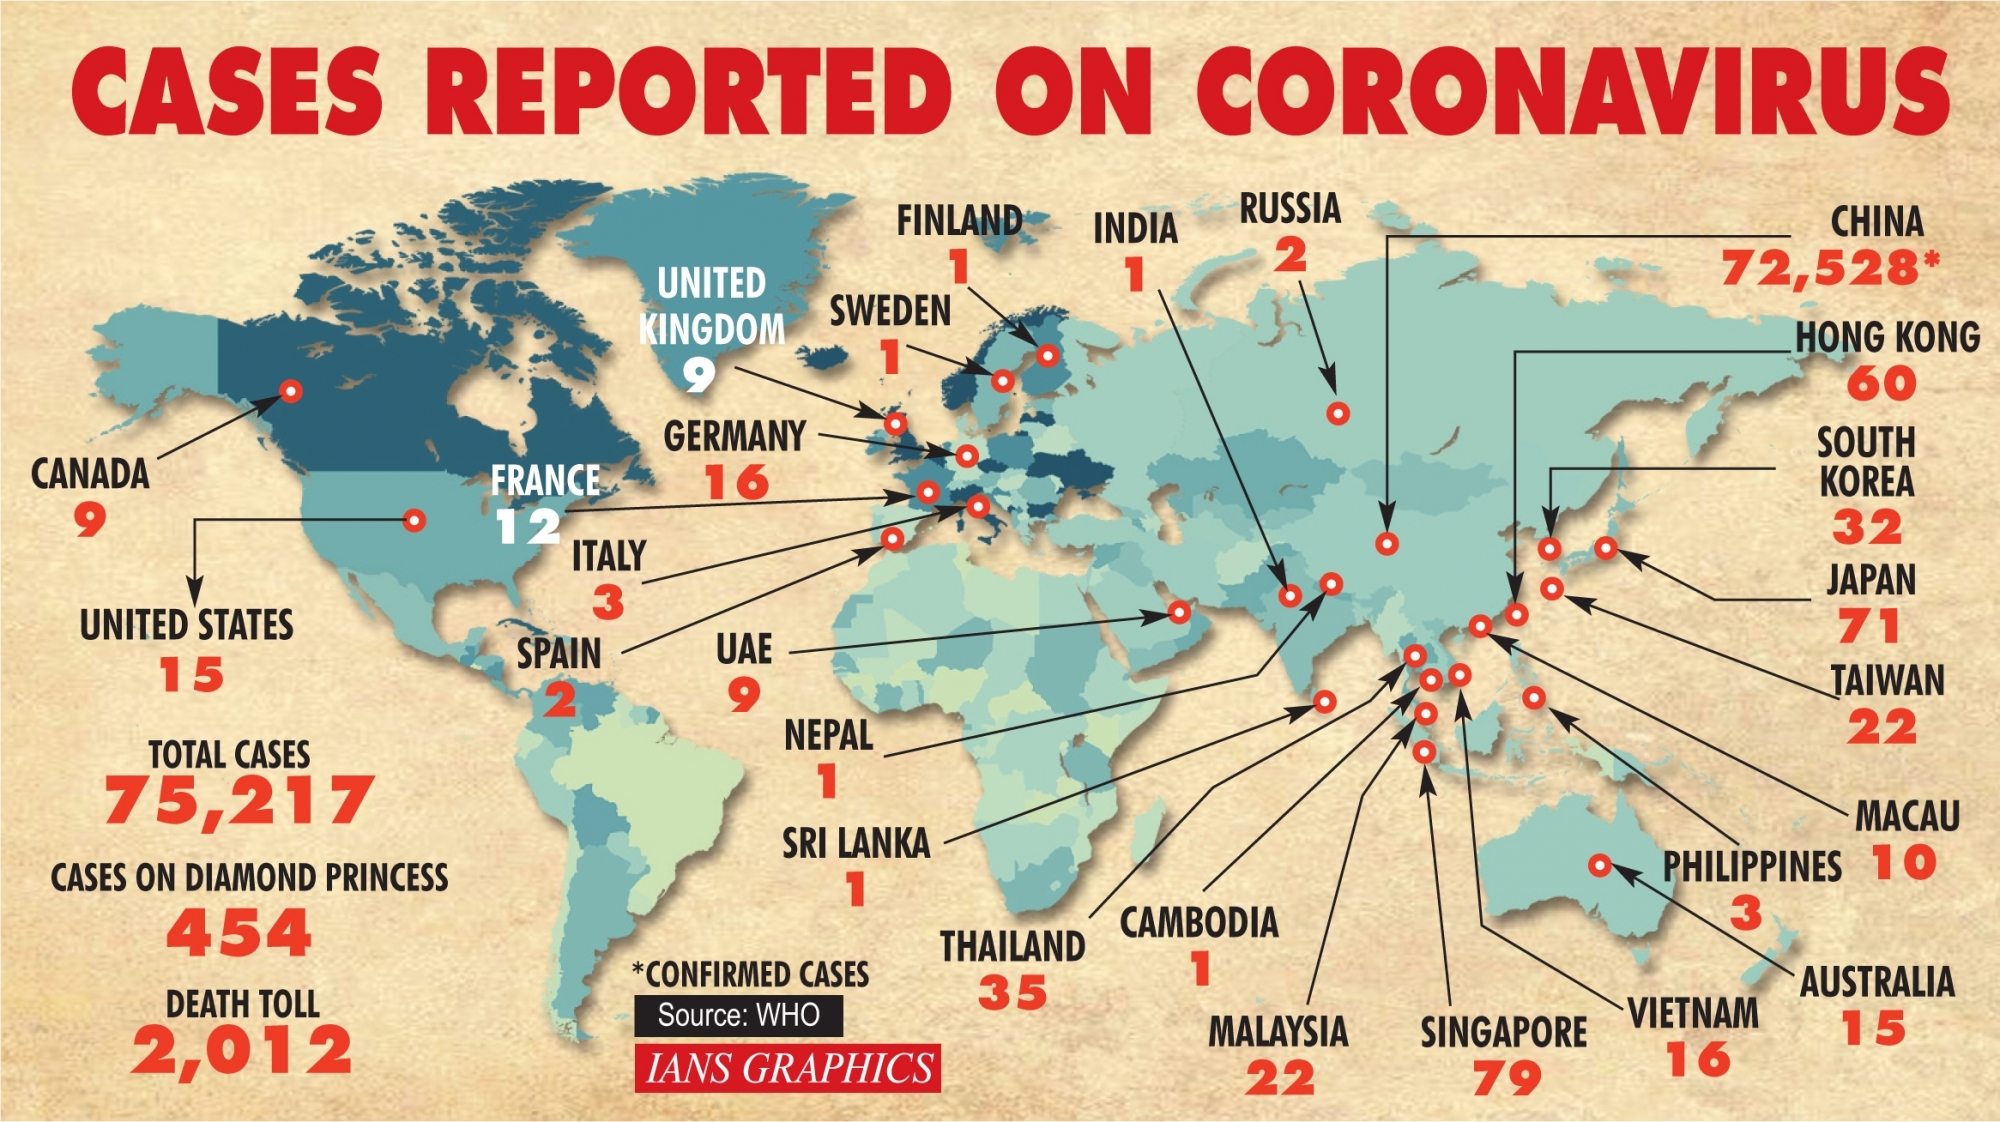 Cases reported on Coronavirus